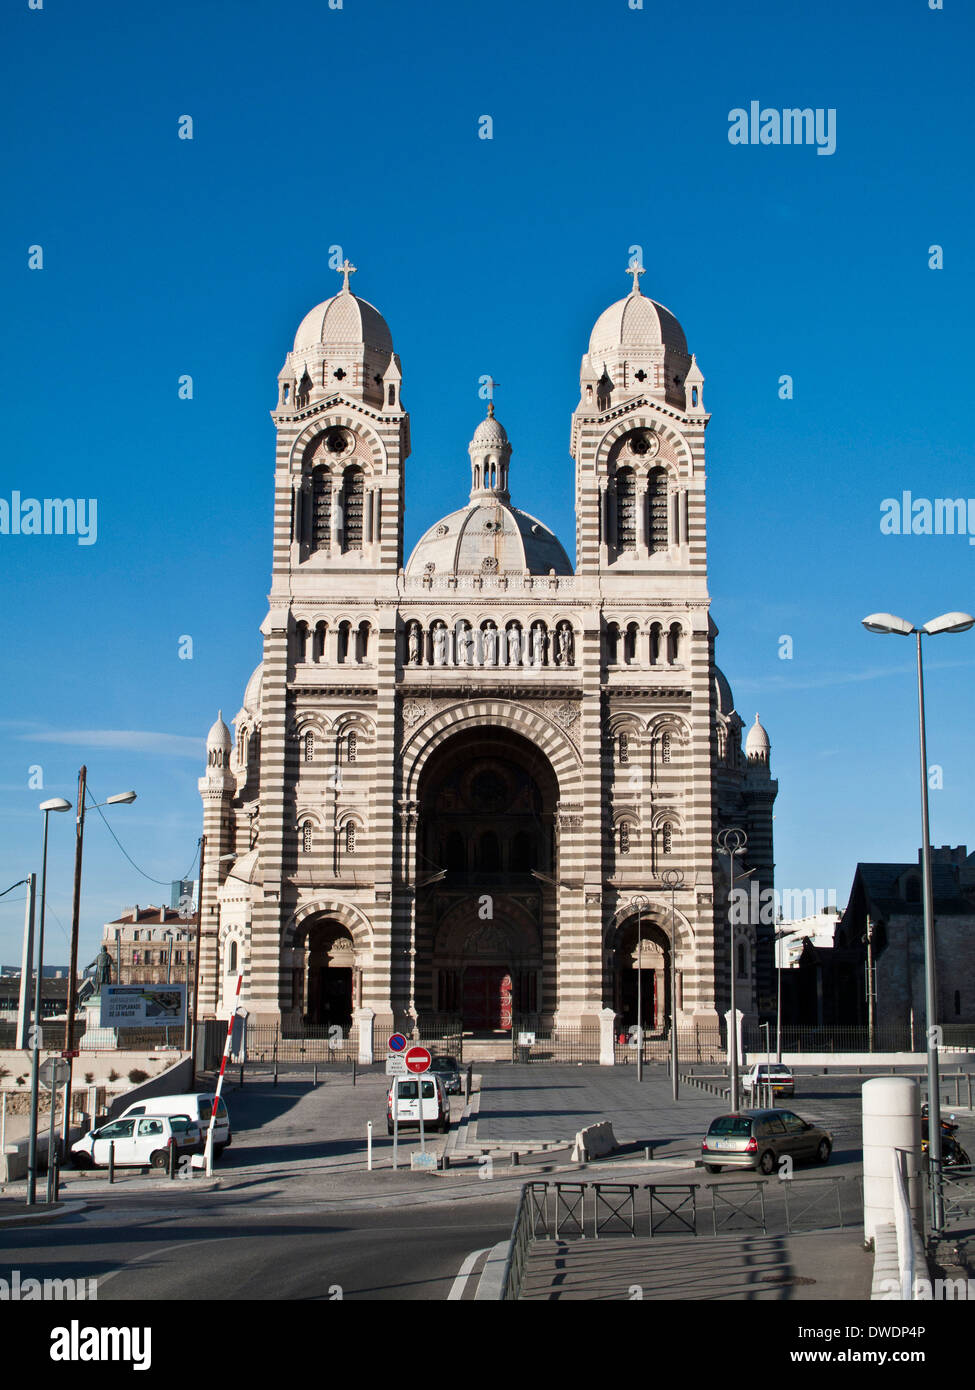 The Cathédrale of Marseille Notre Dame de la Major in Marseille, France  Stock Photo - Alamy